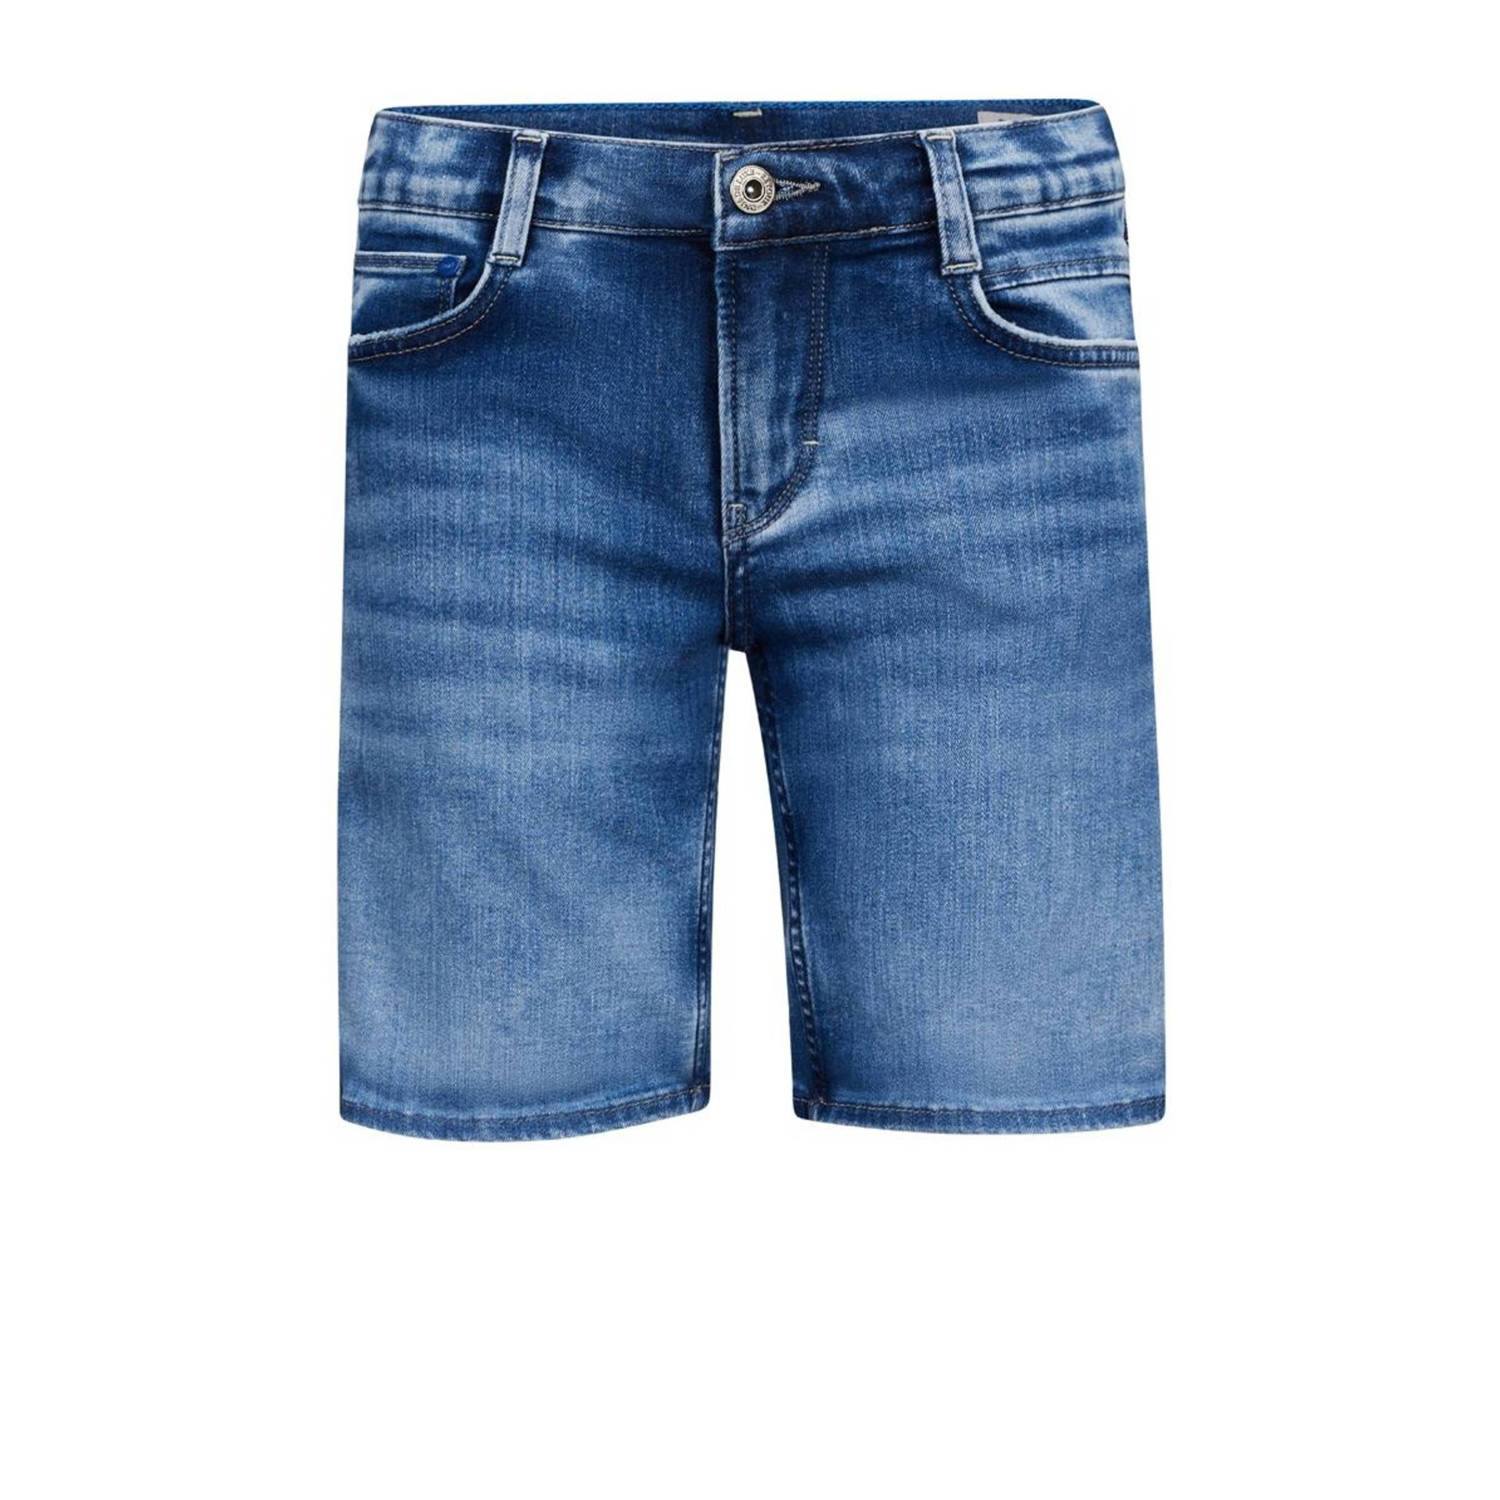 Retour Jeans denim short Reven Indigo medium blue denim Korte broek Blauw Jongens Stretchdenim 116